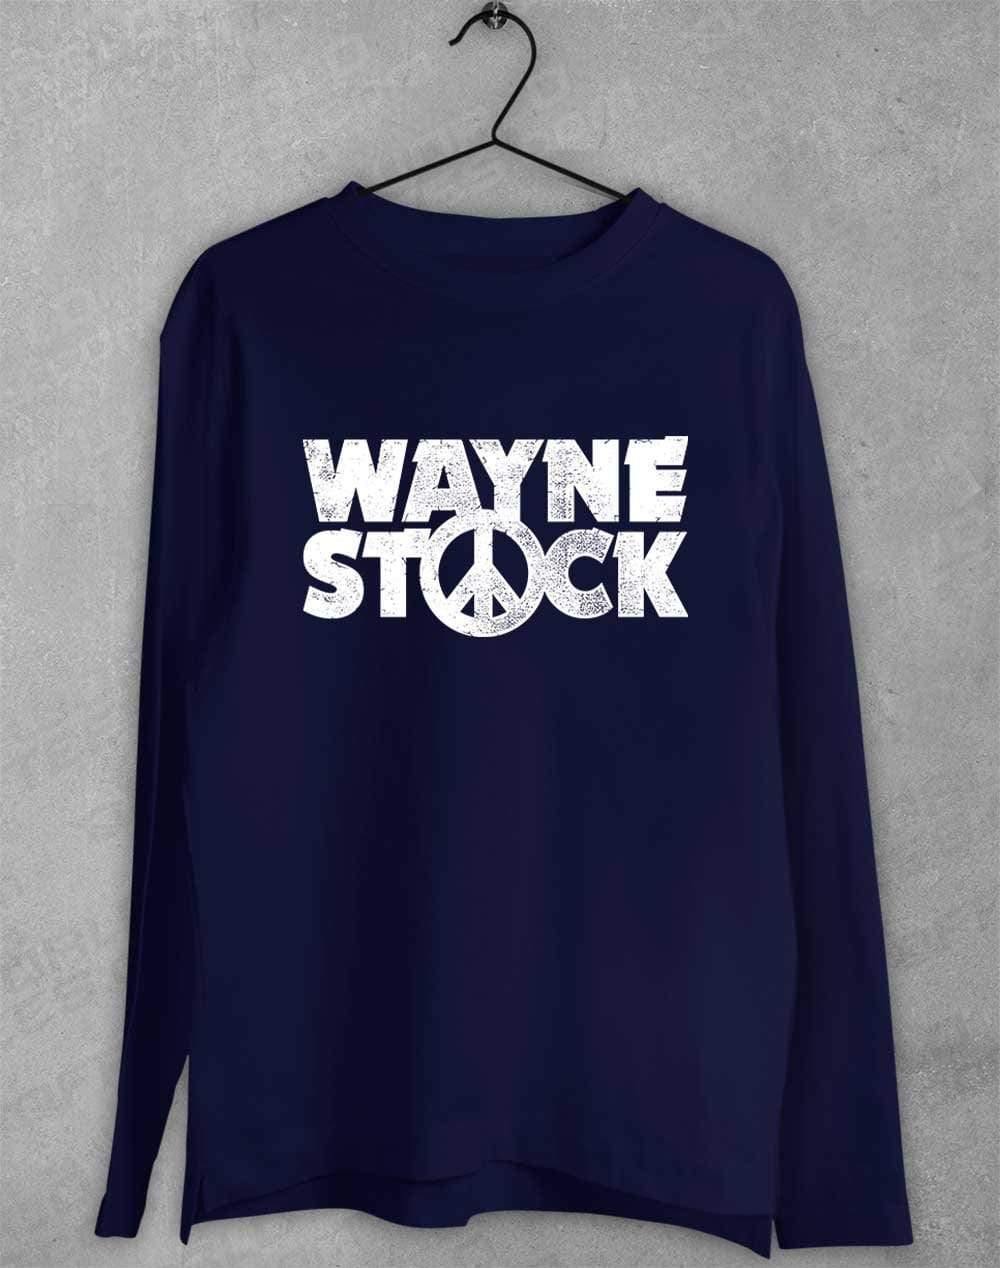 Waynestock Long Sleeve T-Shirt S / Navy  - Off World Tees